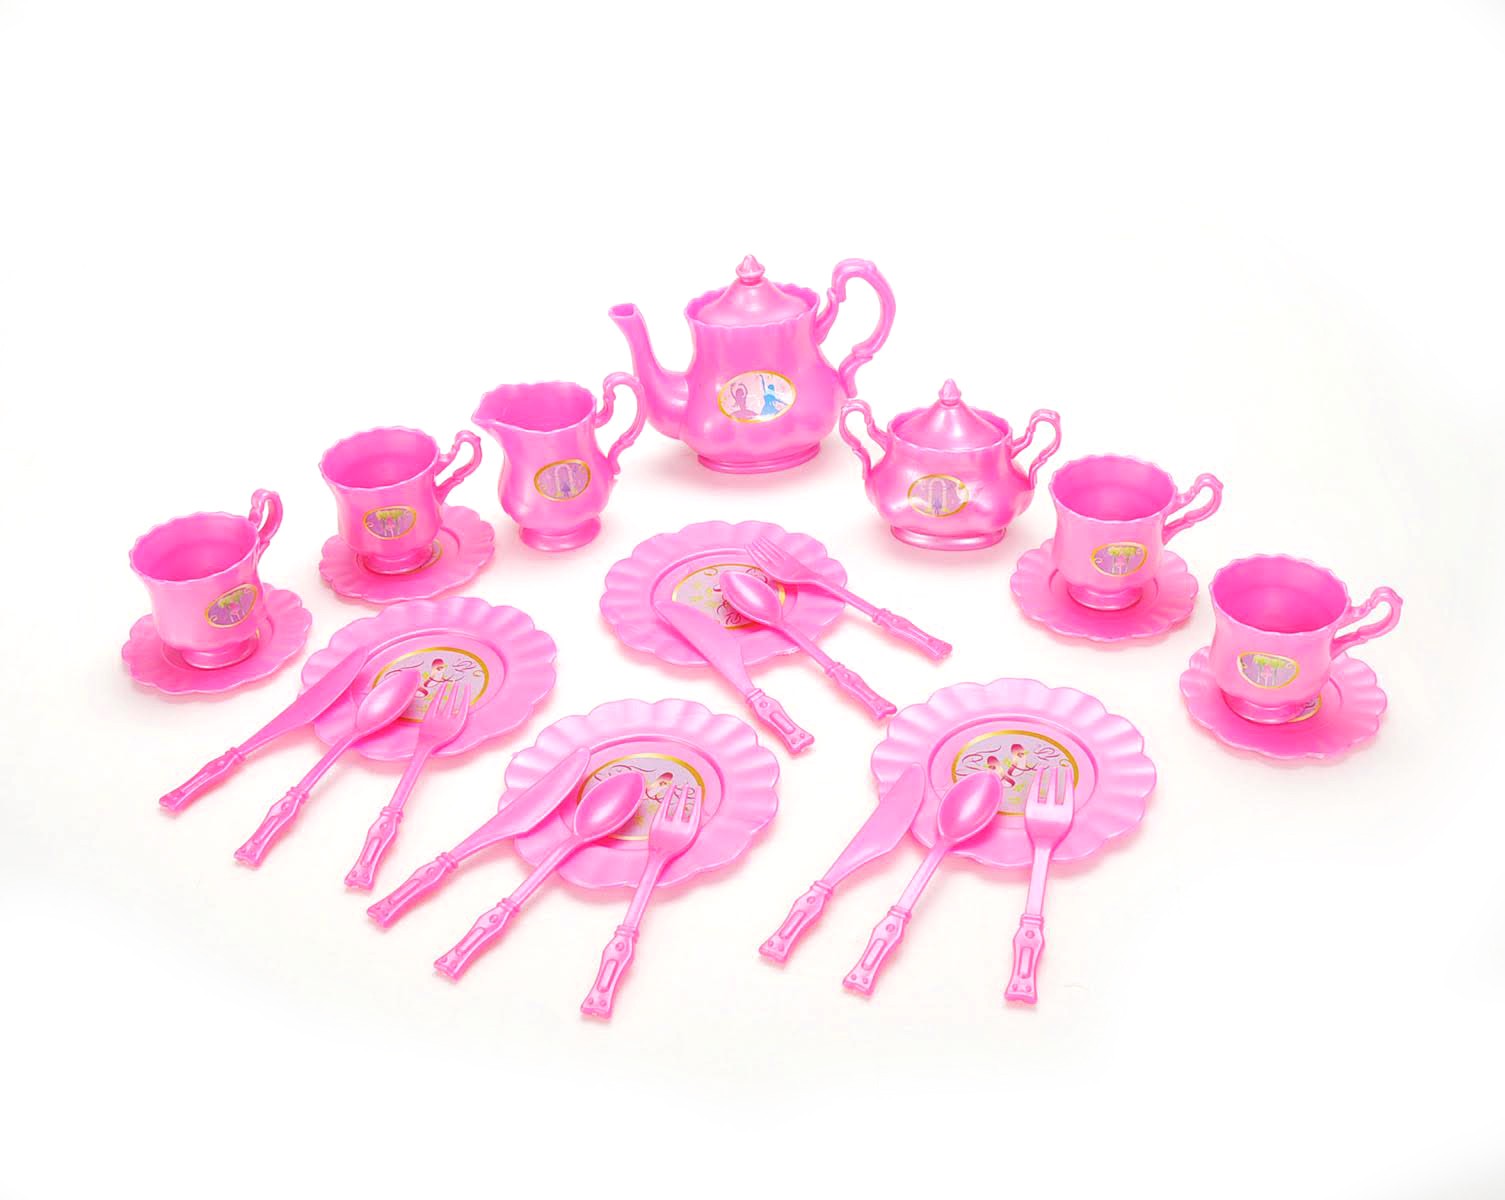 Princess Tea Party Set With Pink Tea Pots And Kitchen Utensils